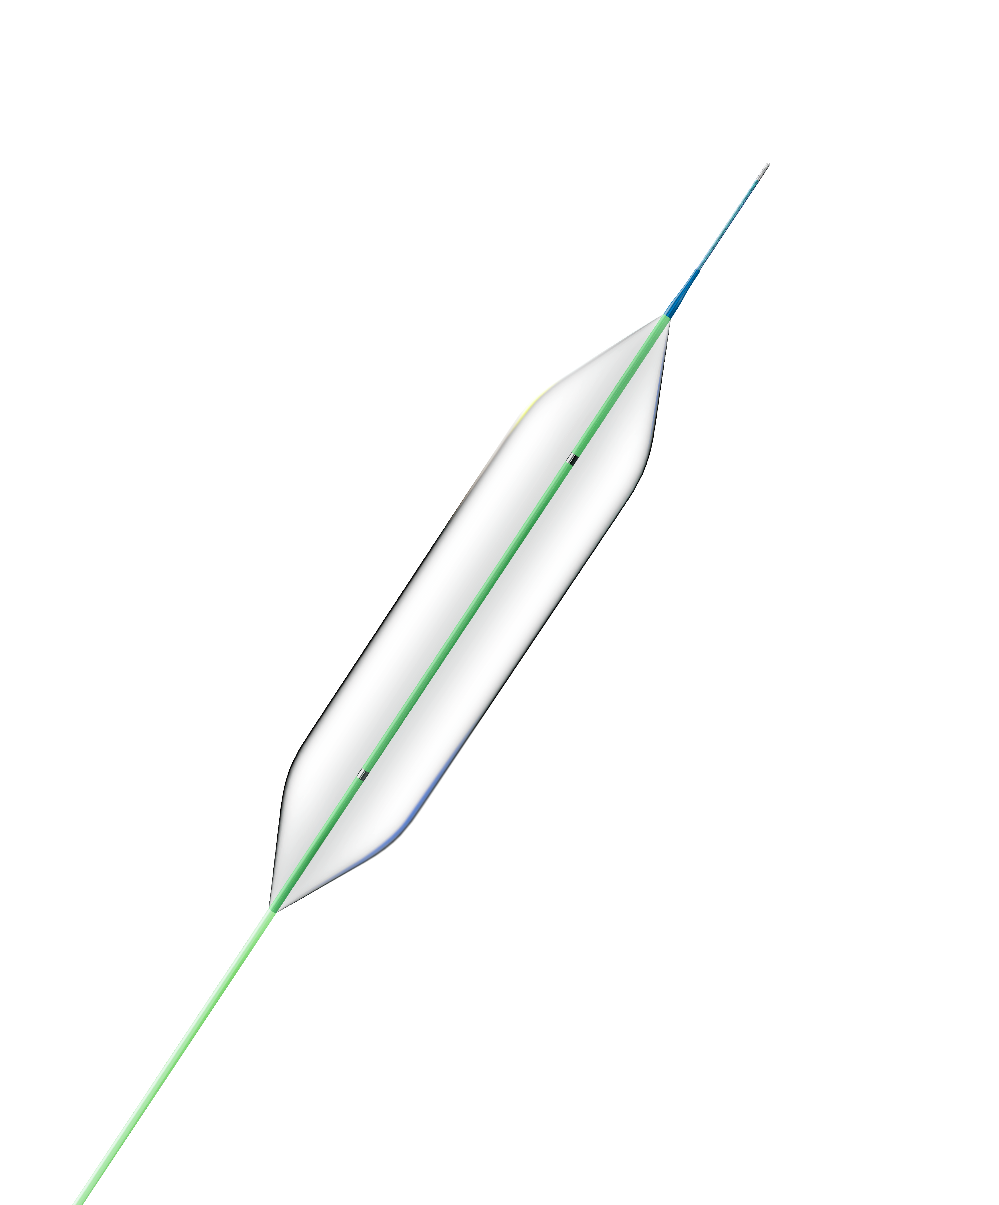 Sabelly® LD PTA Ballon Dilatation Catheter